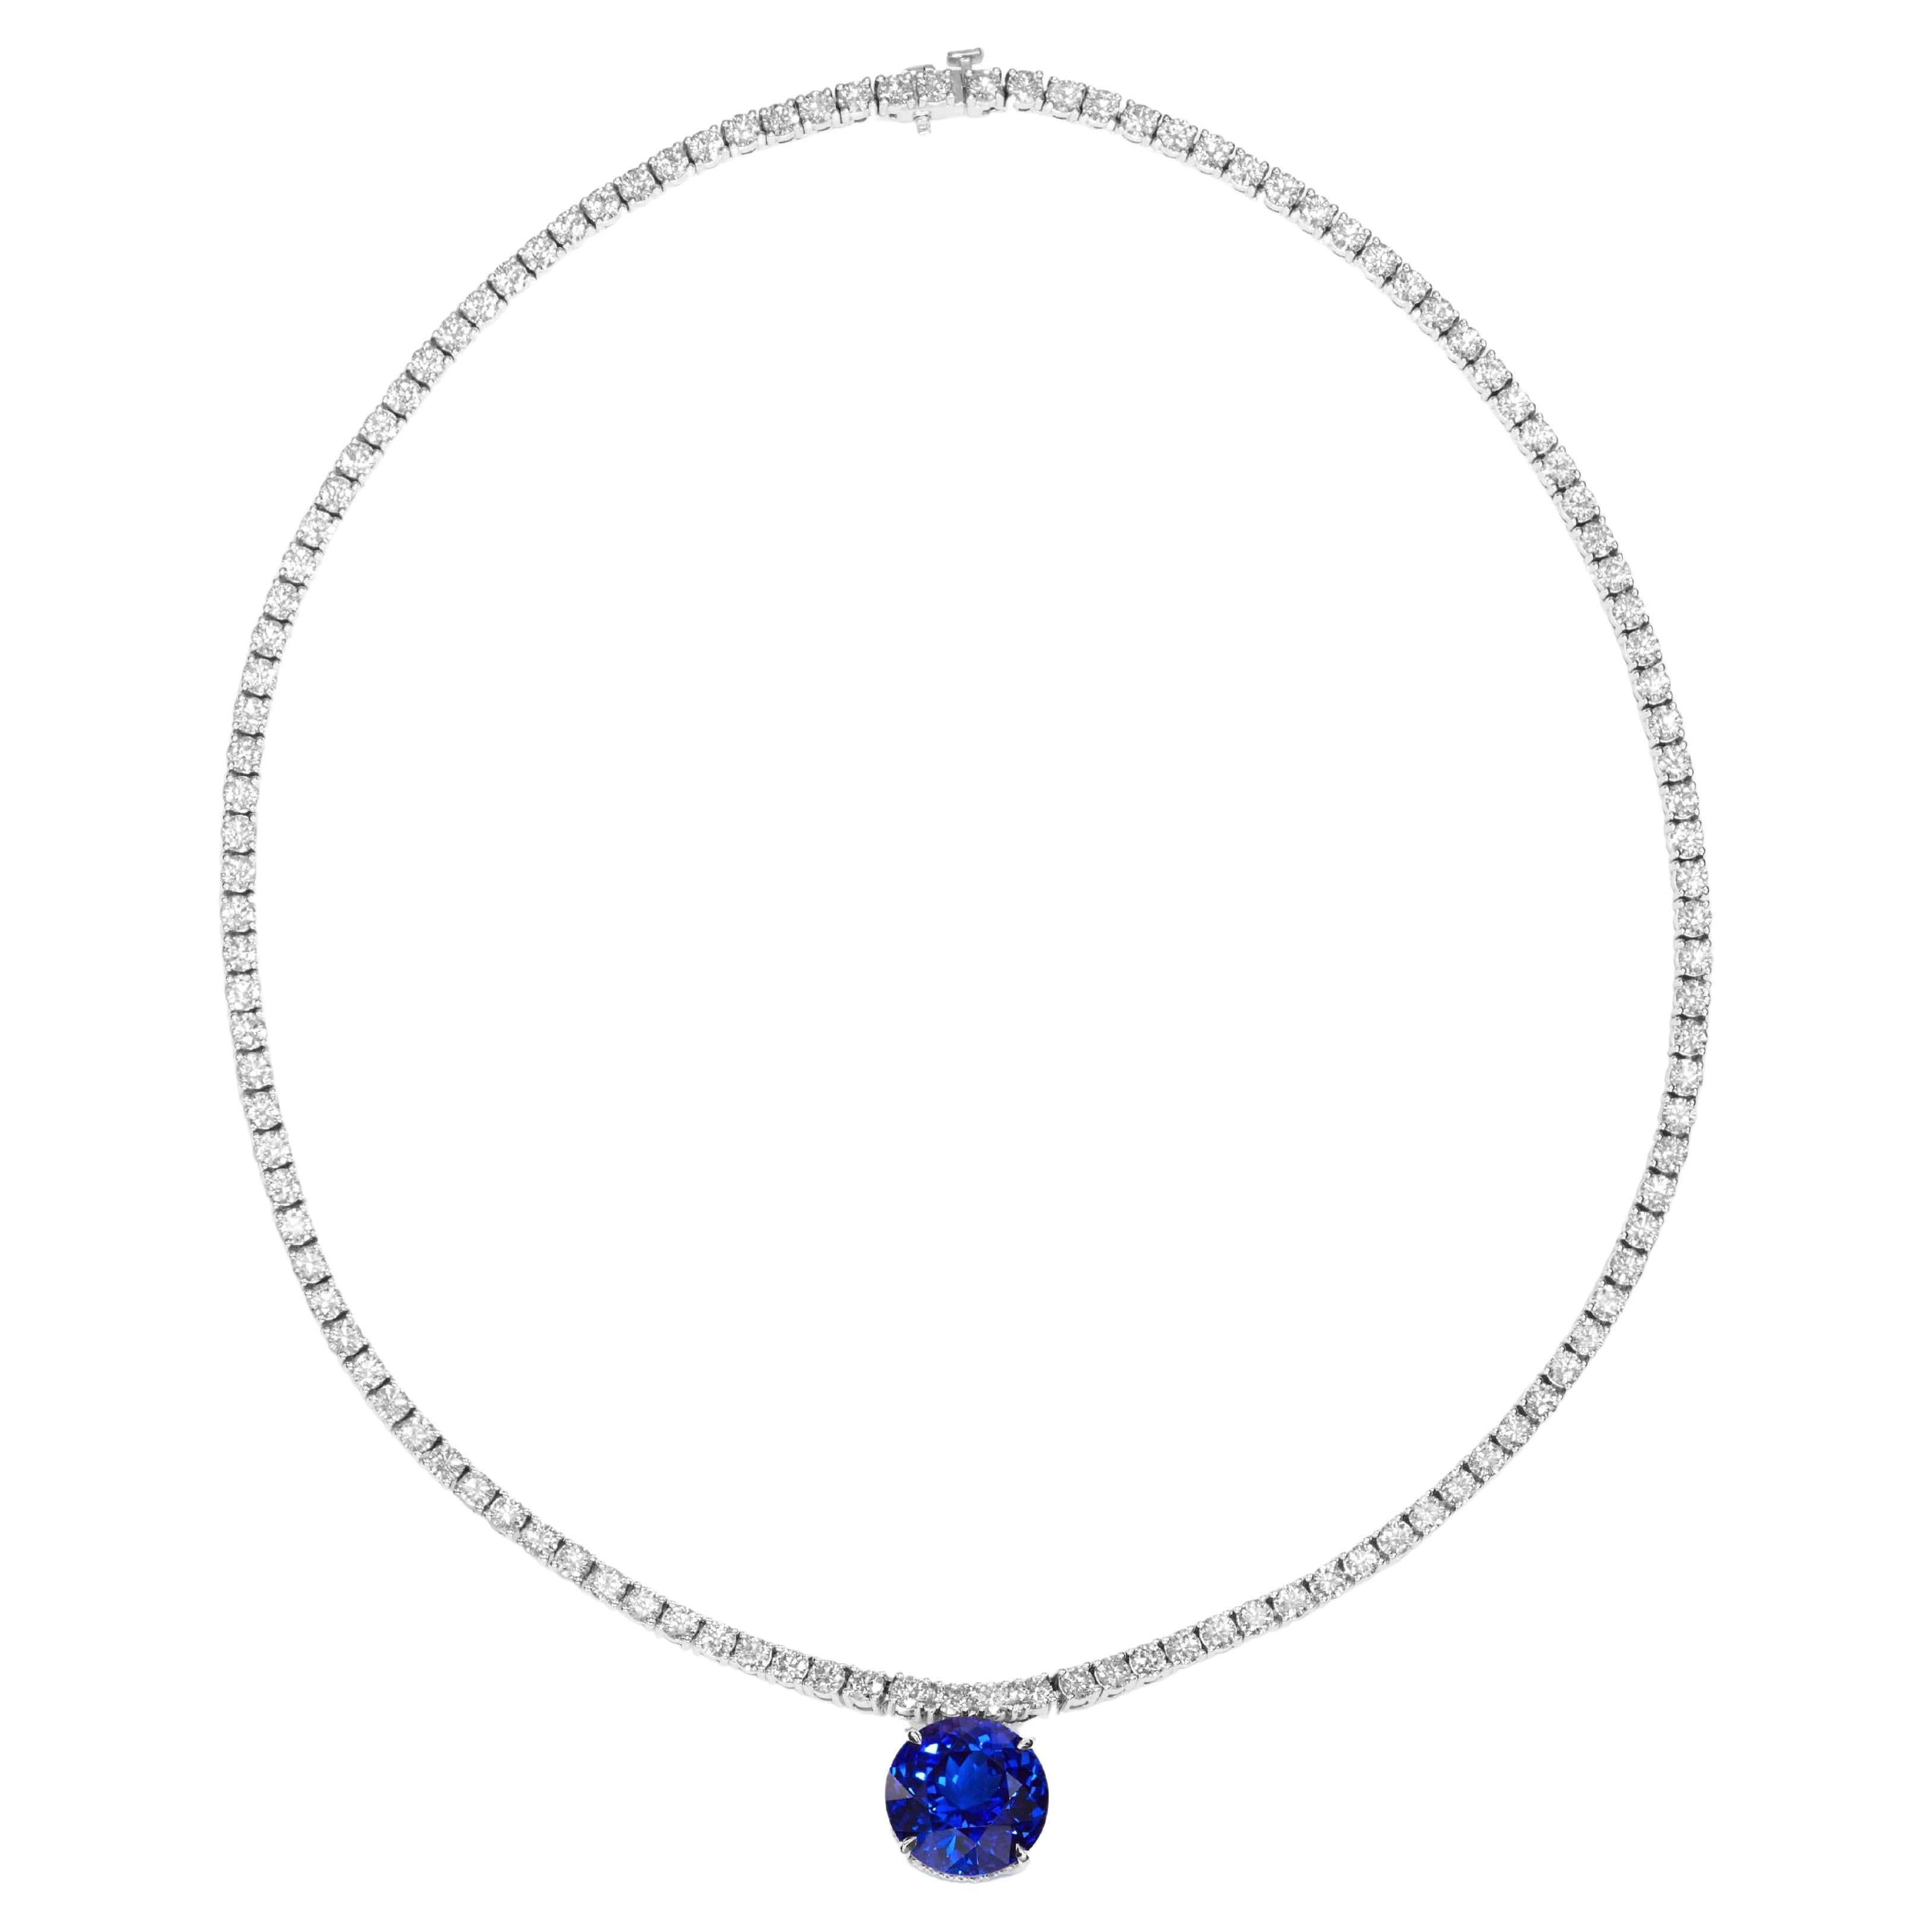 Diamond Tennis Necklace with Detachable 12.01 Carat Tanzanite Pendant For Sale